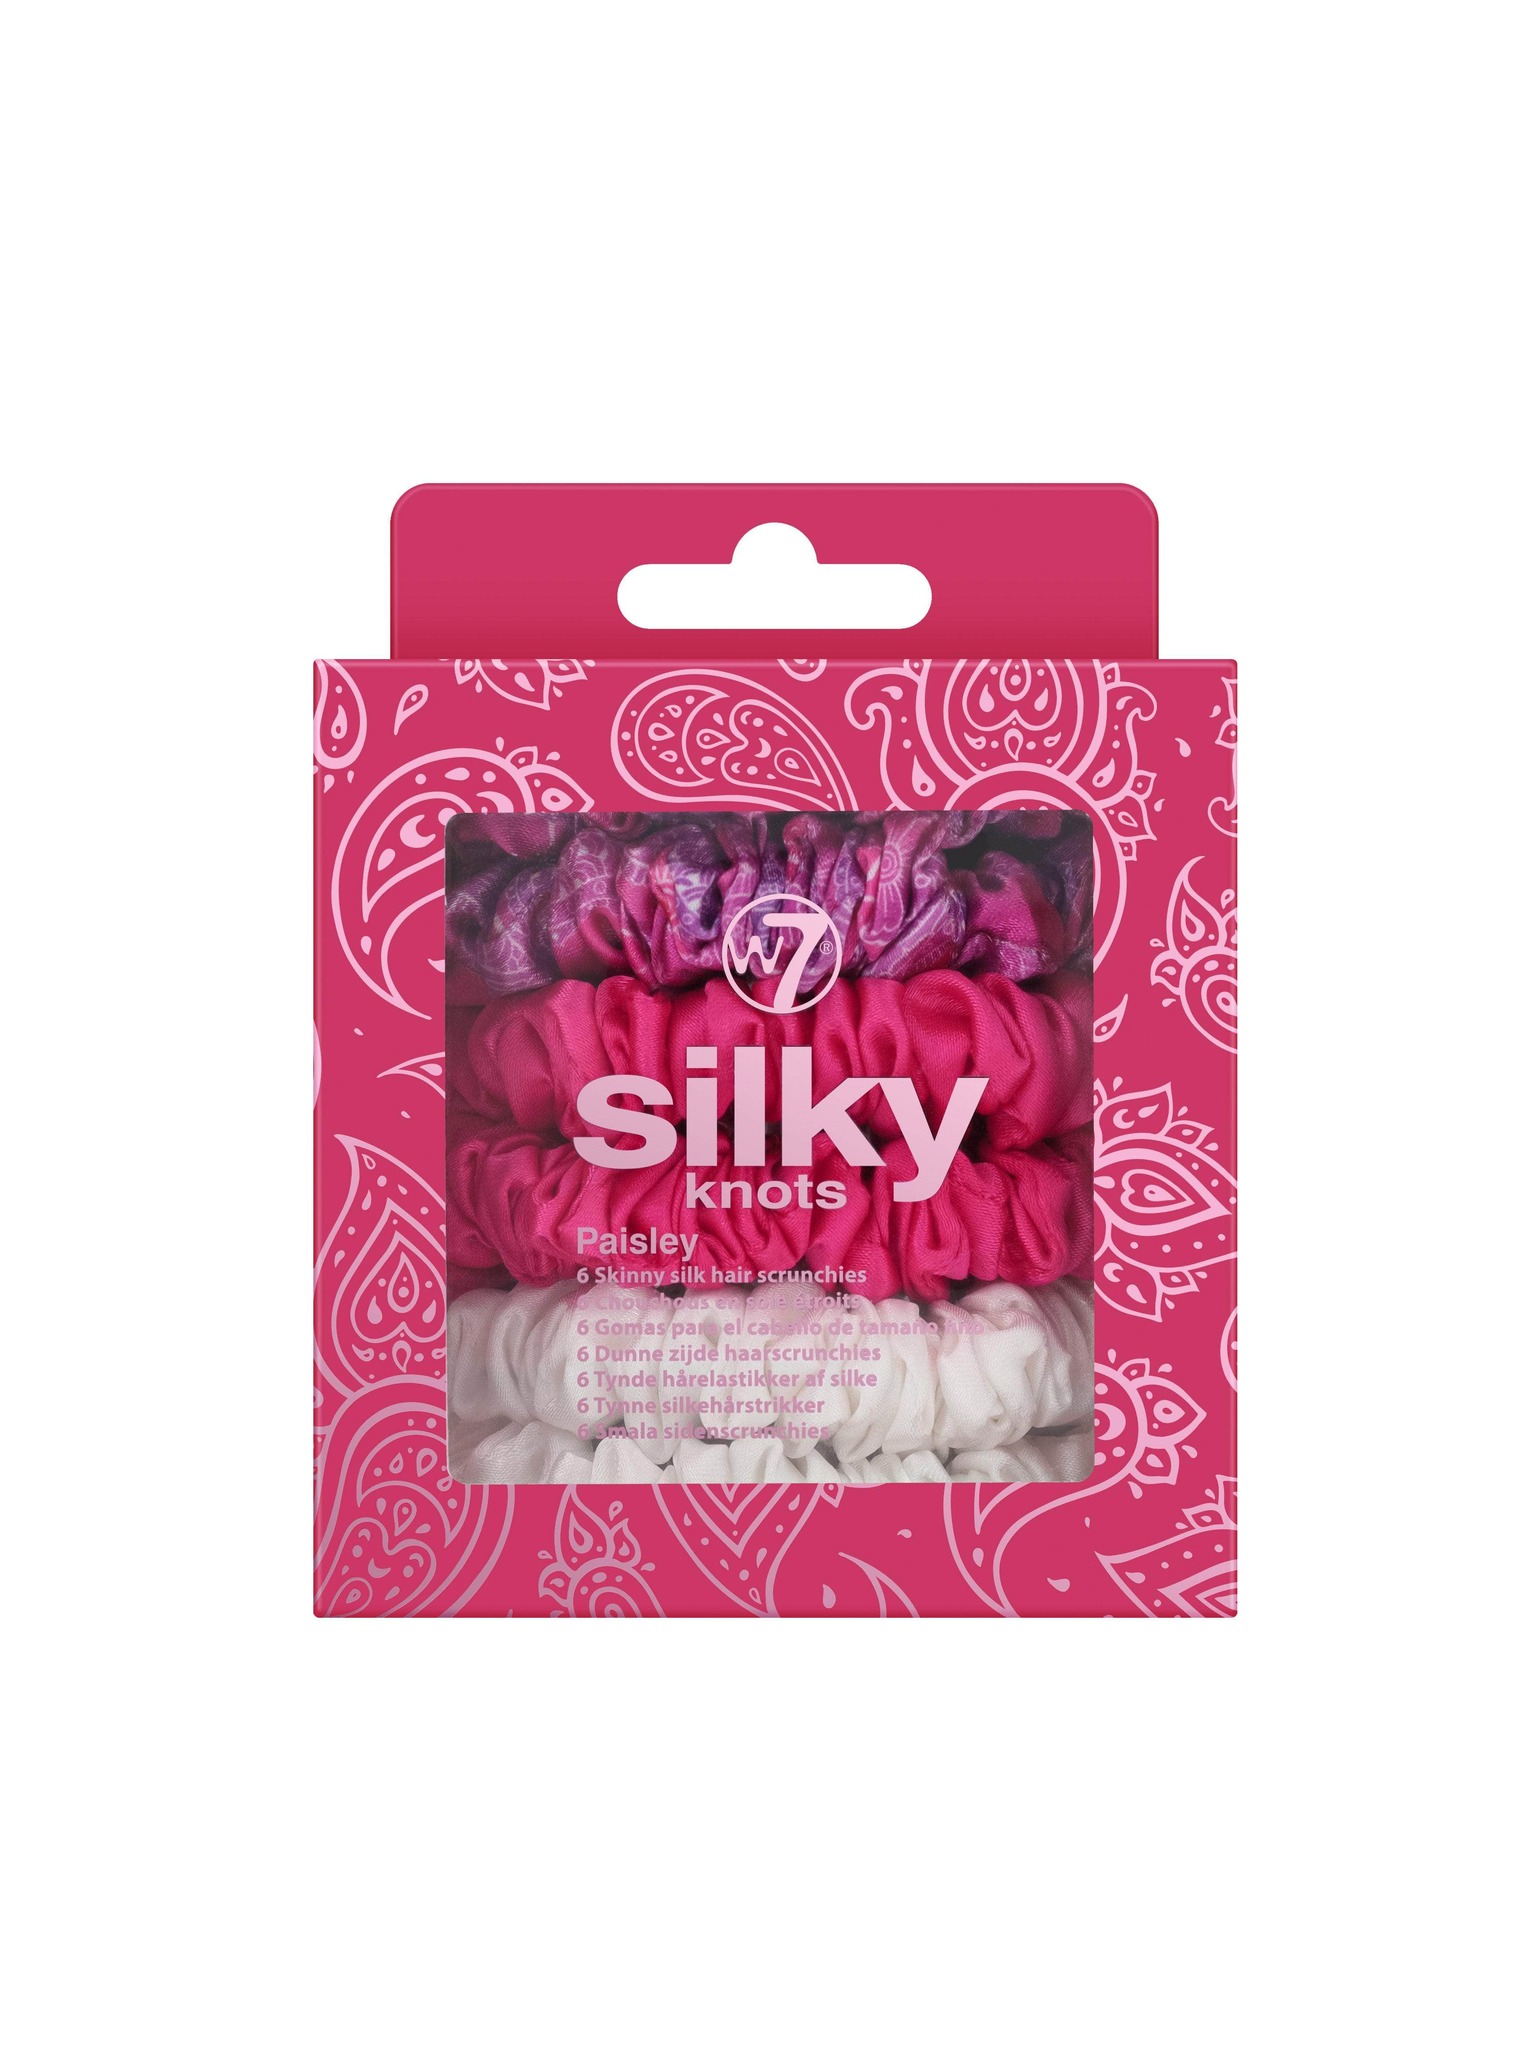 W7 SILKY KNOTS Hair Scrunchies 6 Pack - Paisley Print